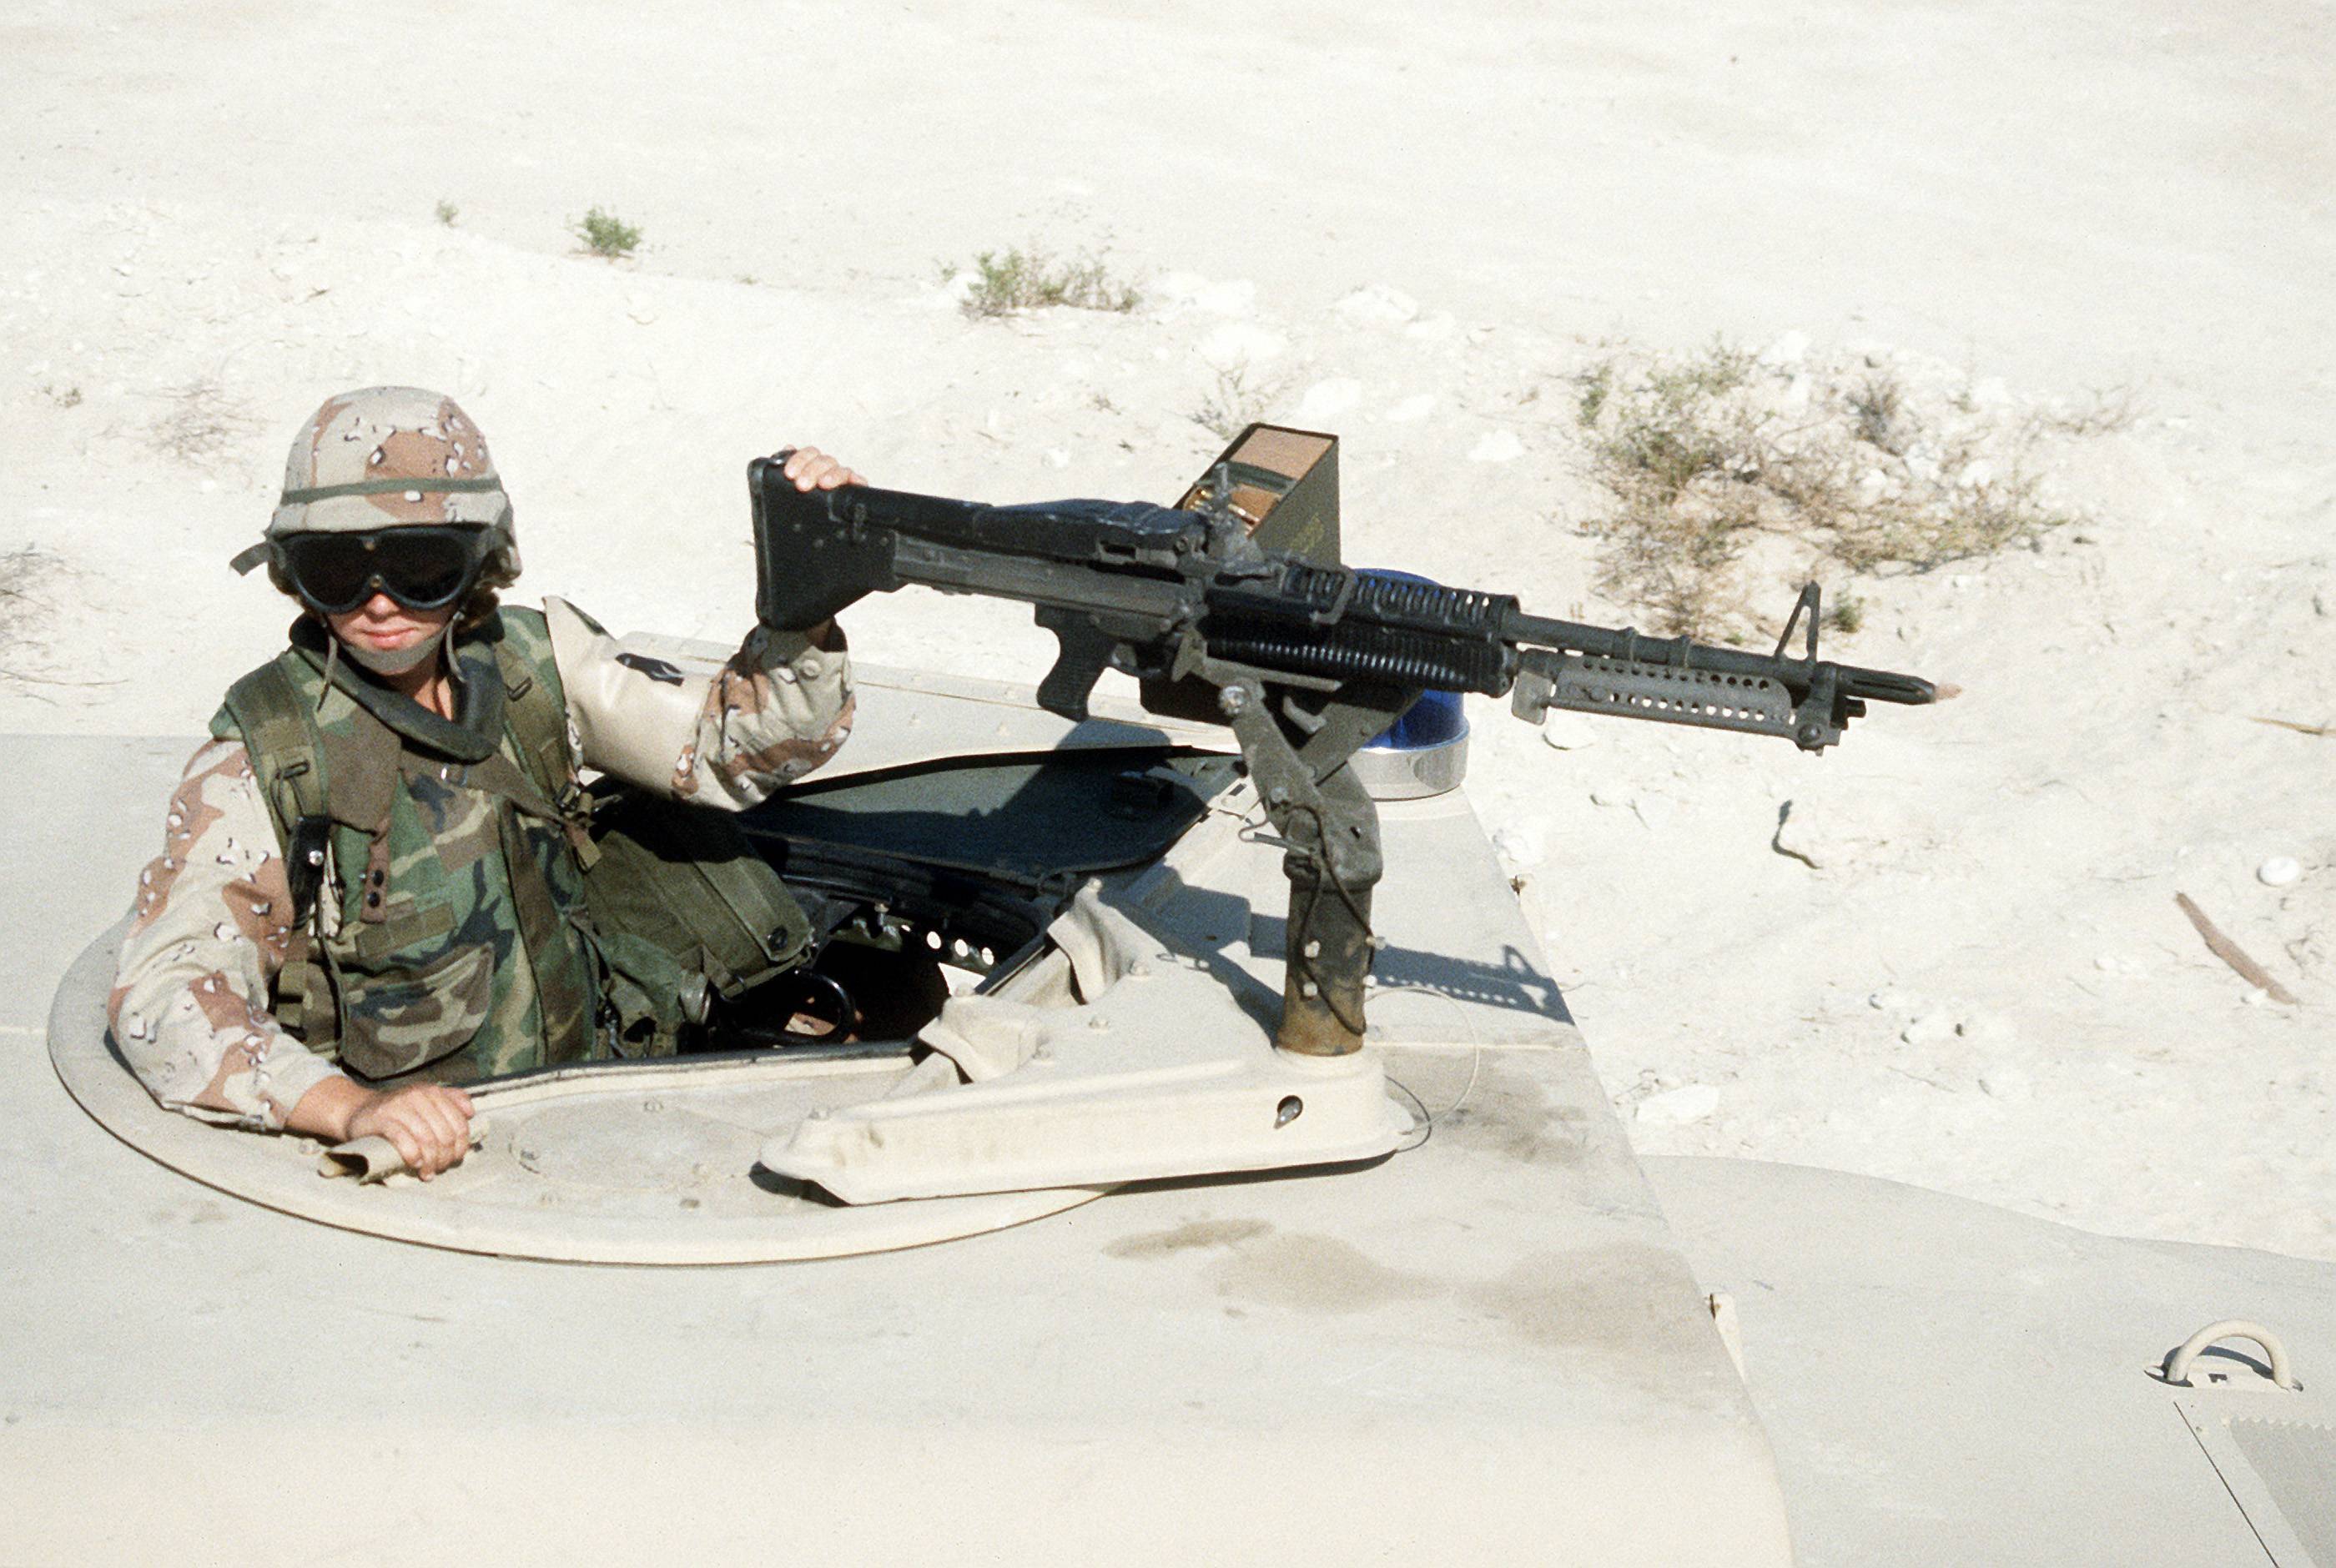 M60 (пулемёт)